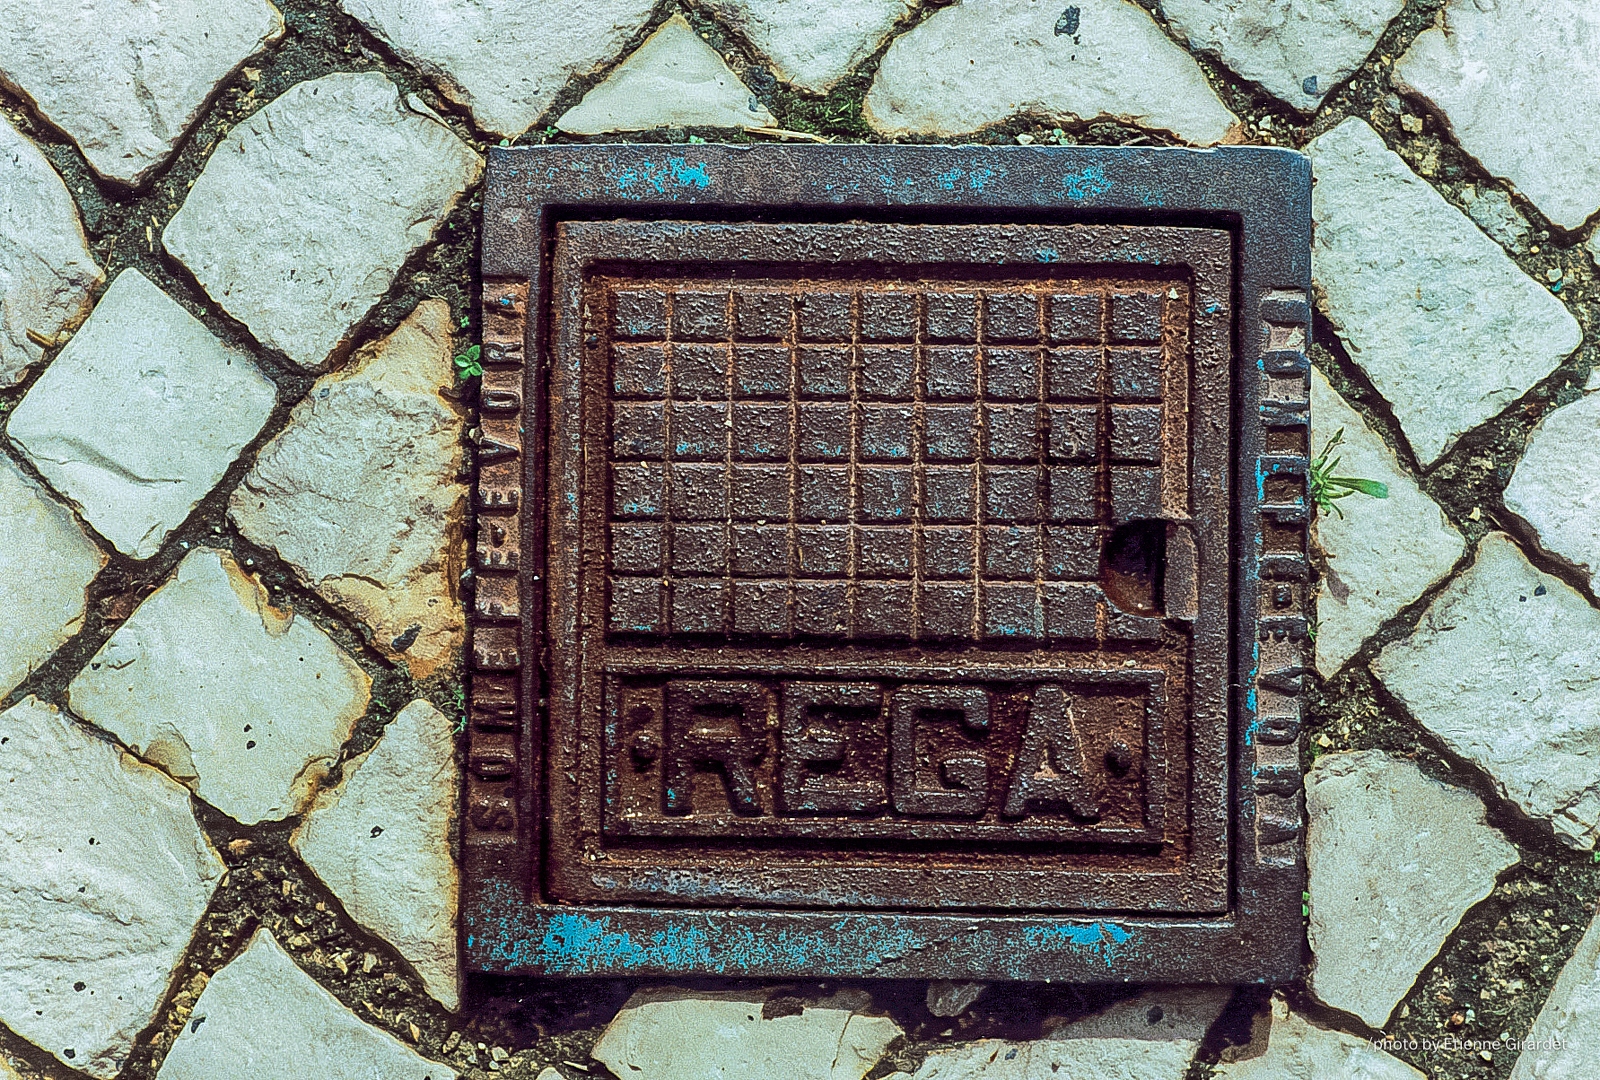 199910i_rega_G-manhole-cover-rega-by-E-Girardet.jpg